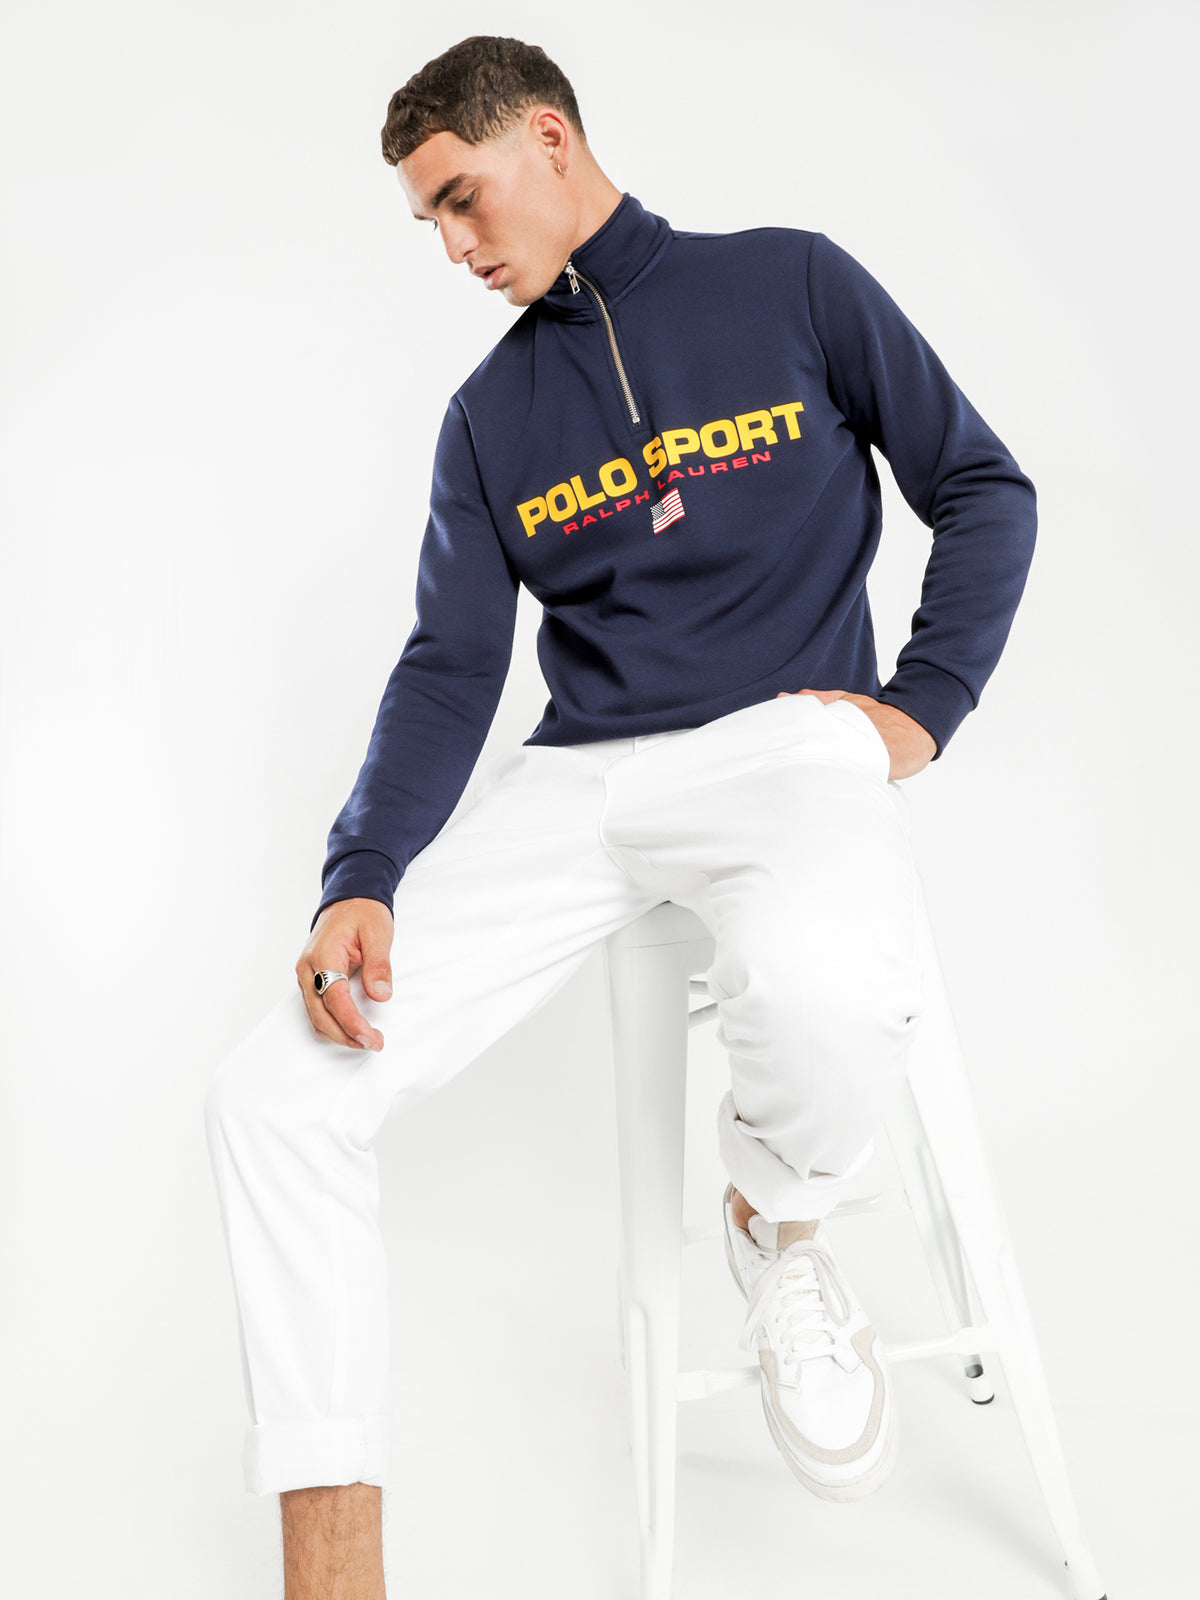 Polo Sport 1/4 Pullover Sweat